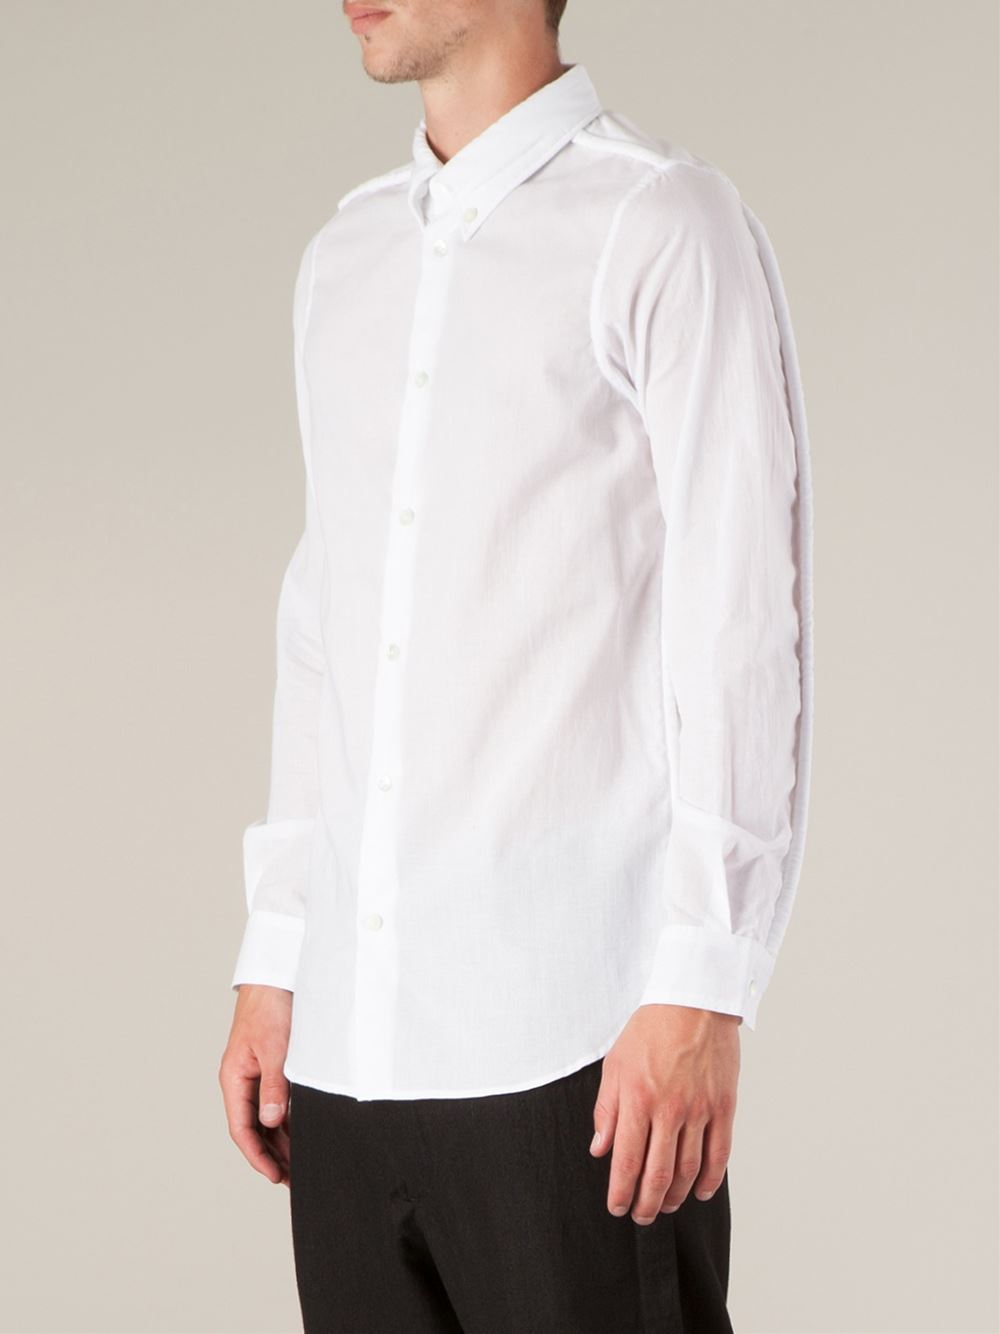 Ann demeulemeester Button-down Collar Shirt in White for Men | Lyst